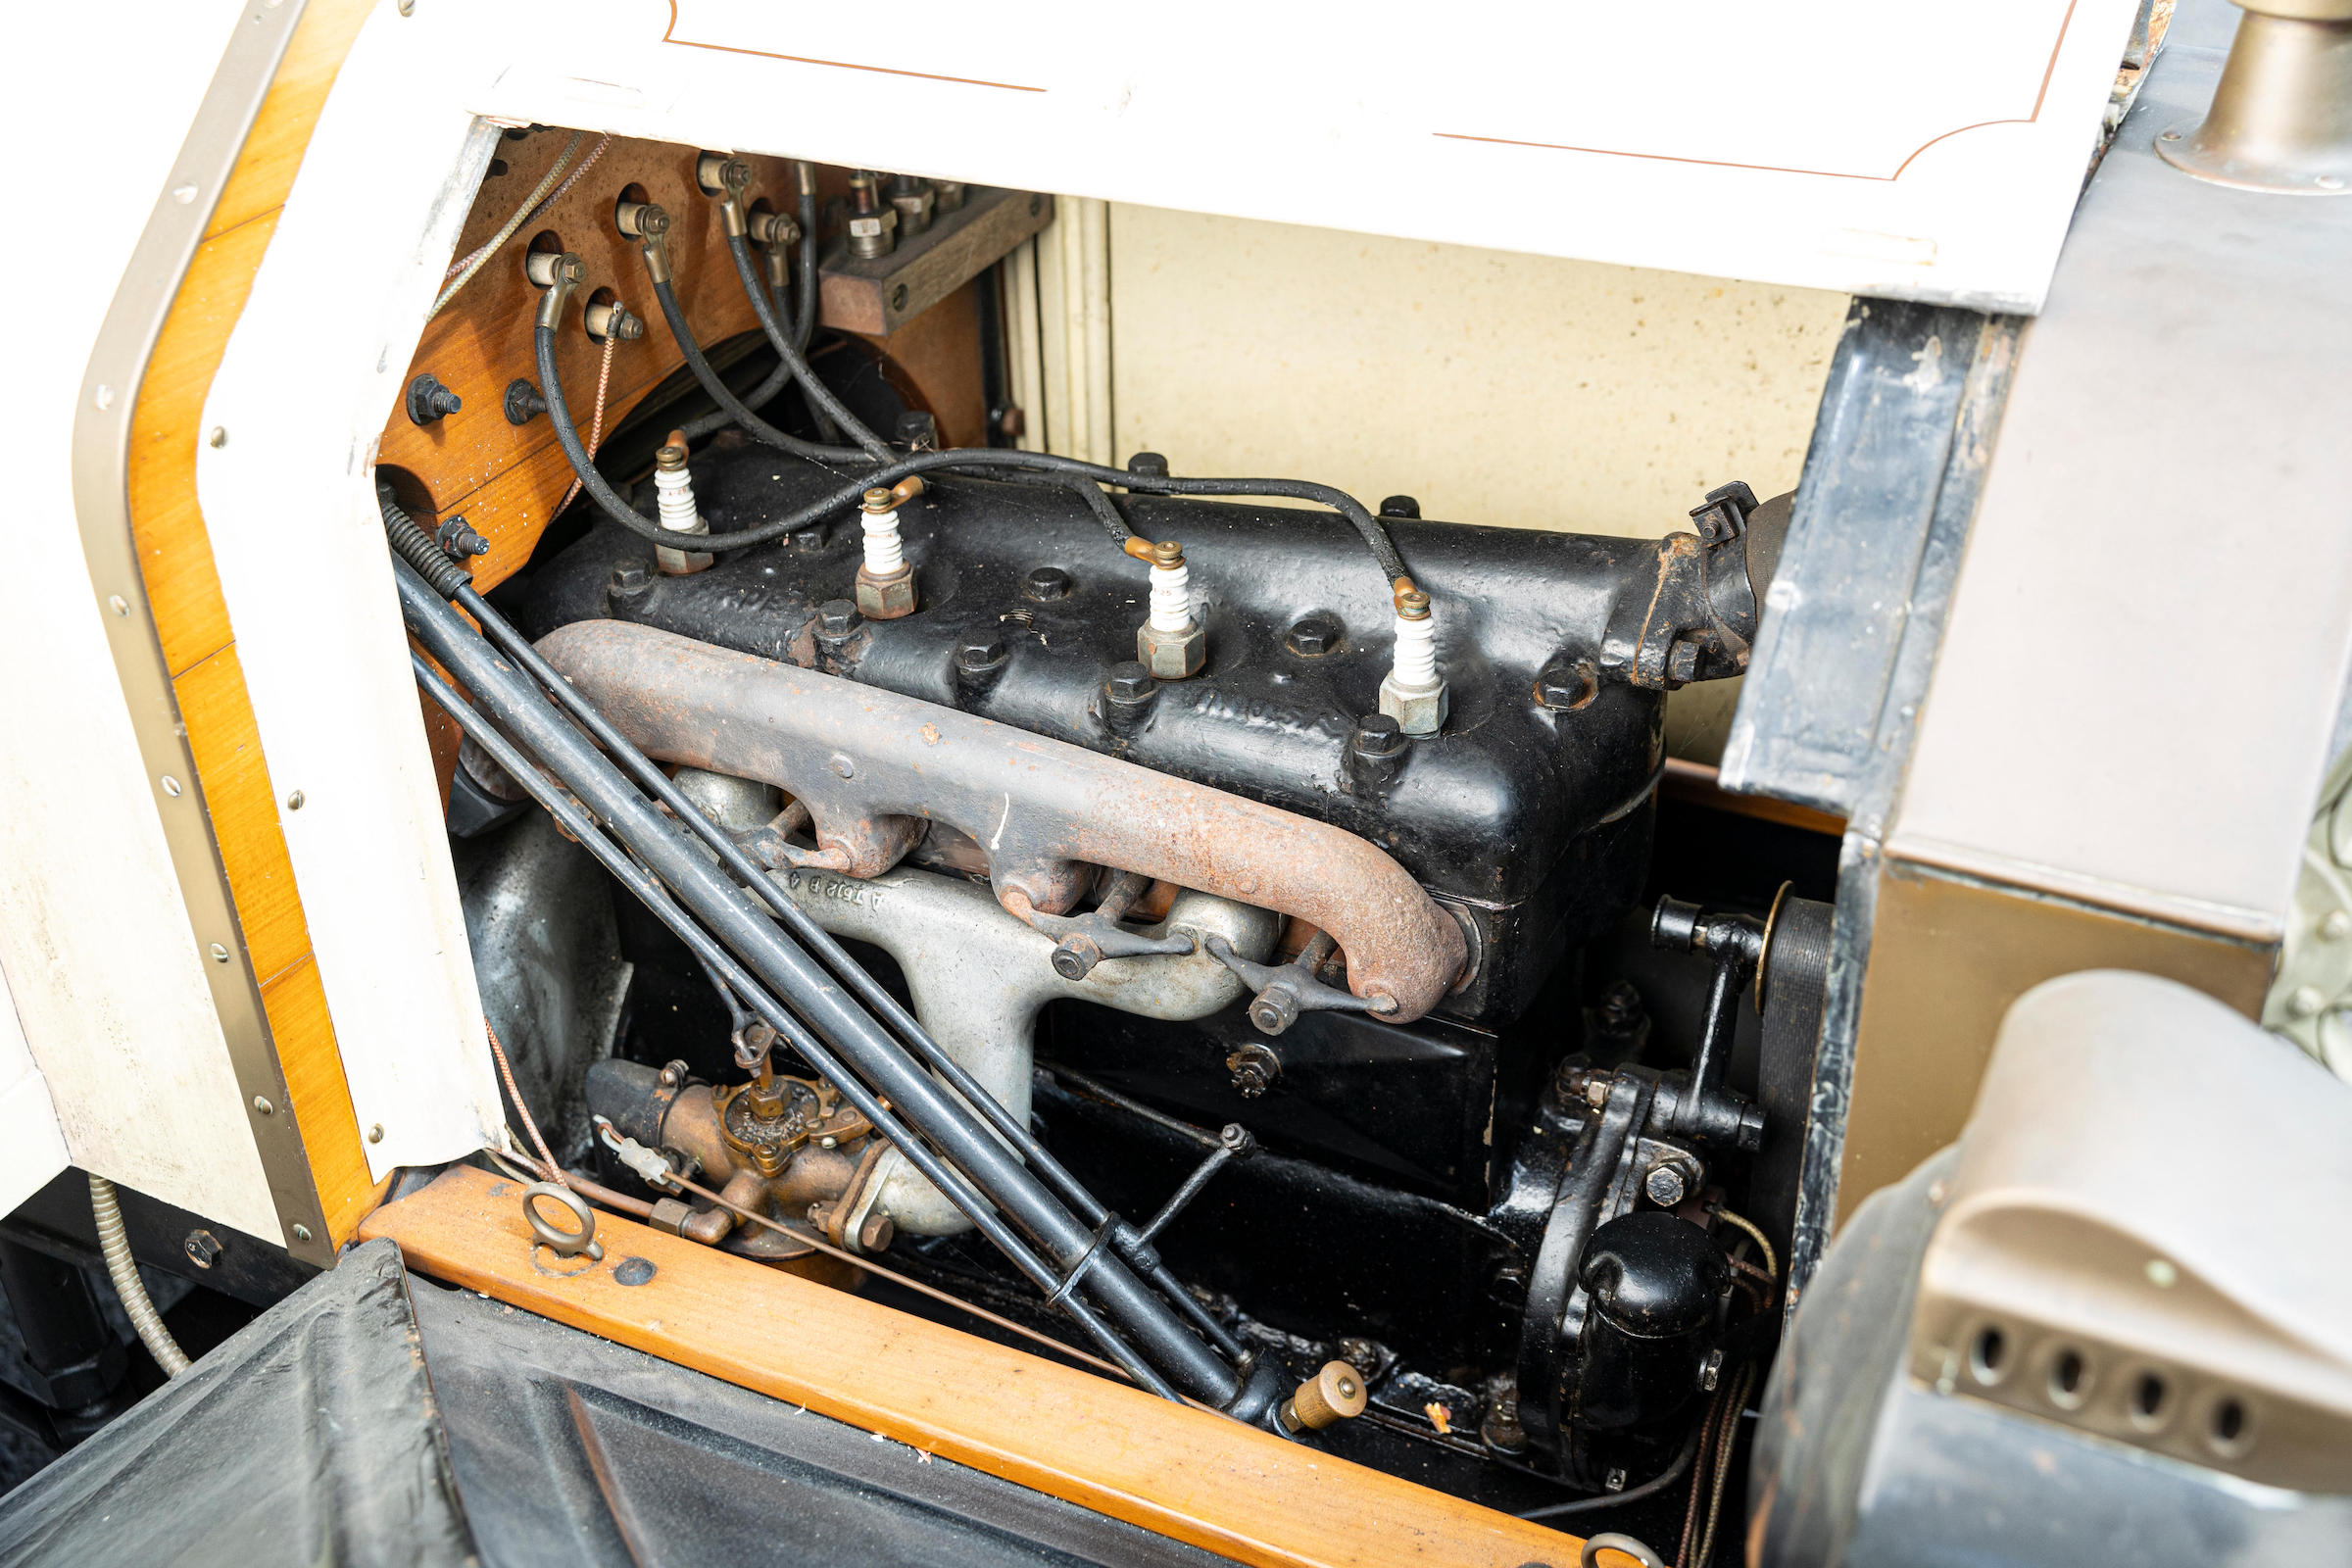 Ford Model T Motor Caravan engine